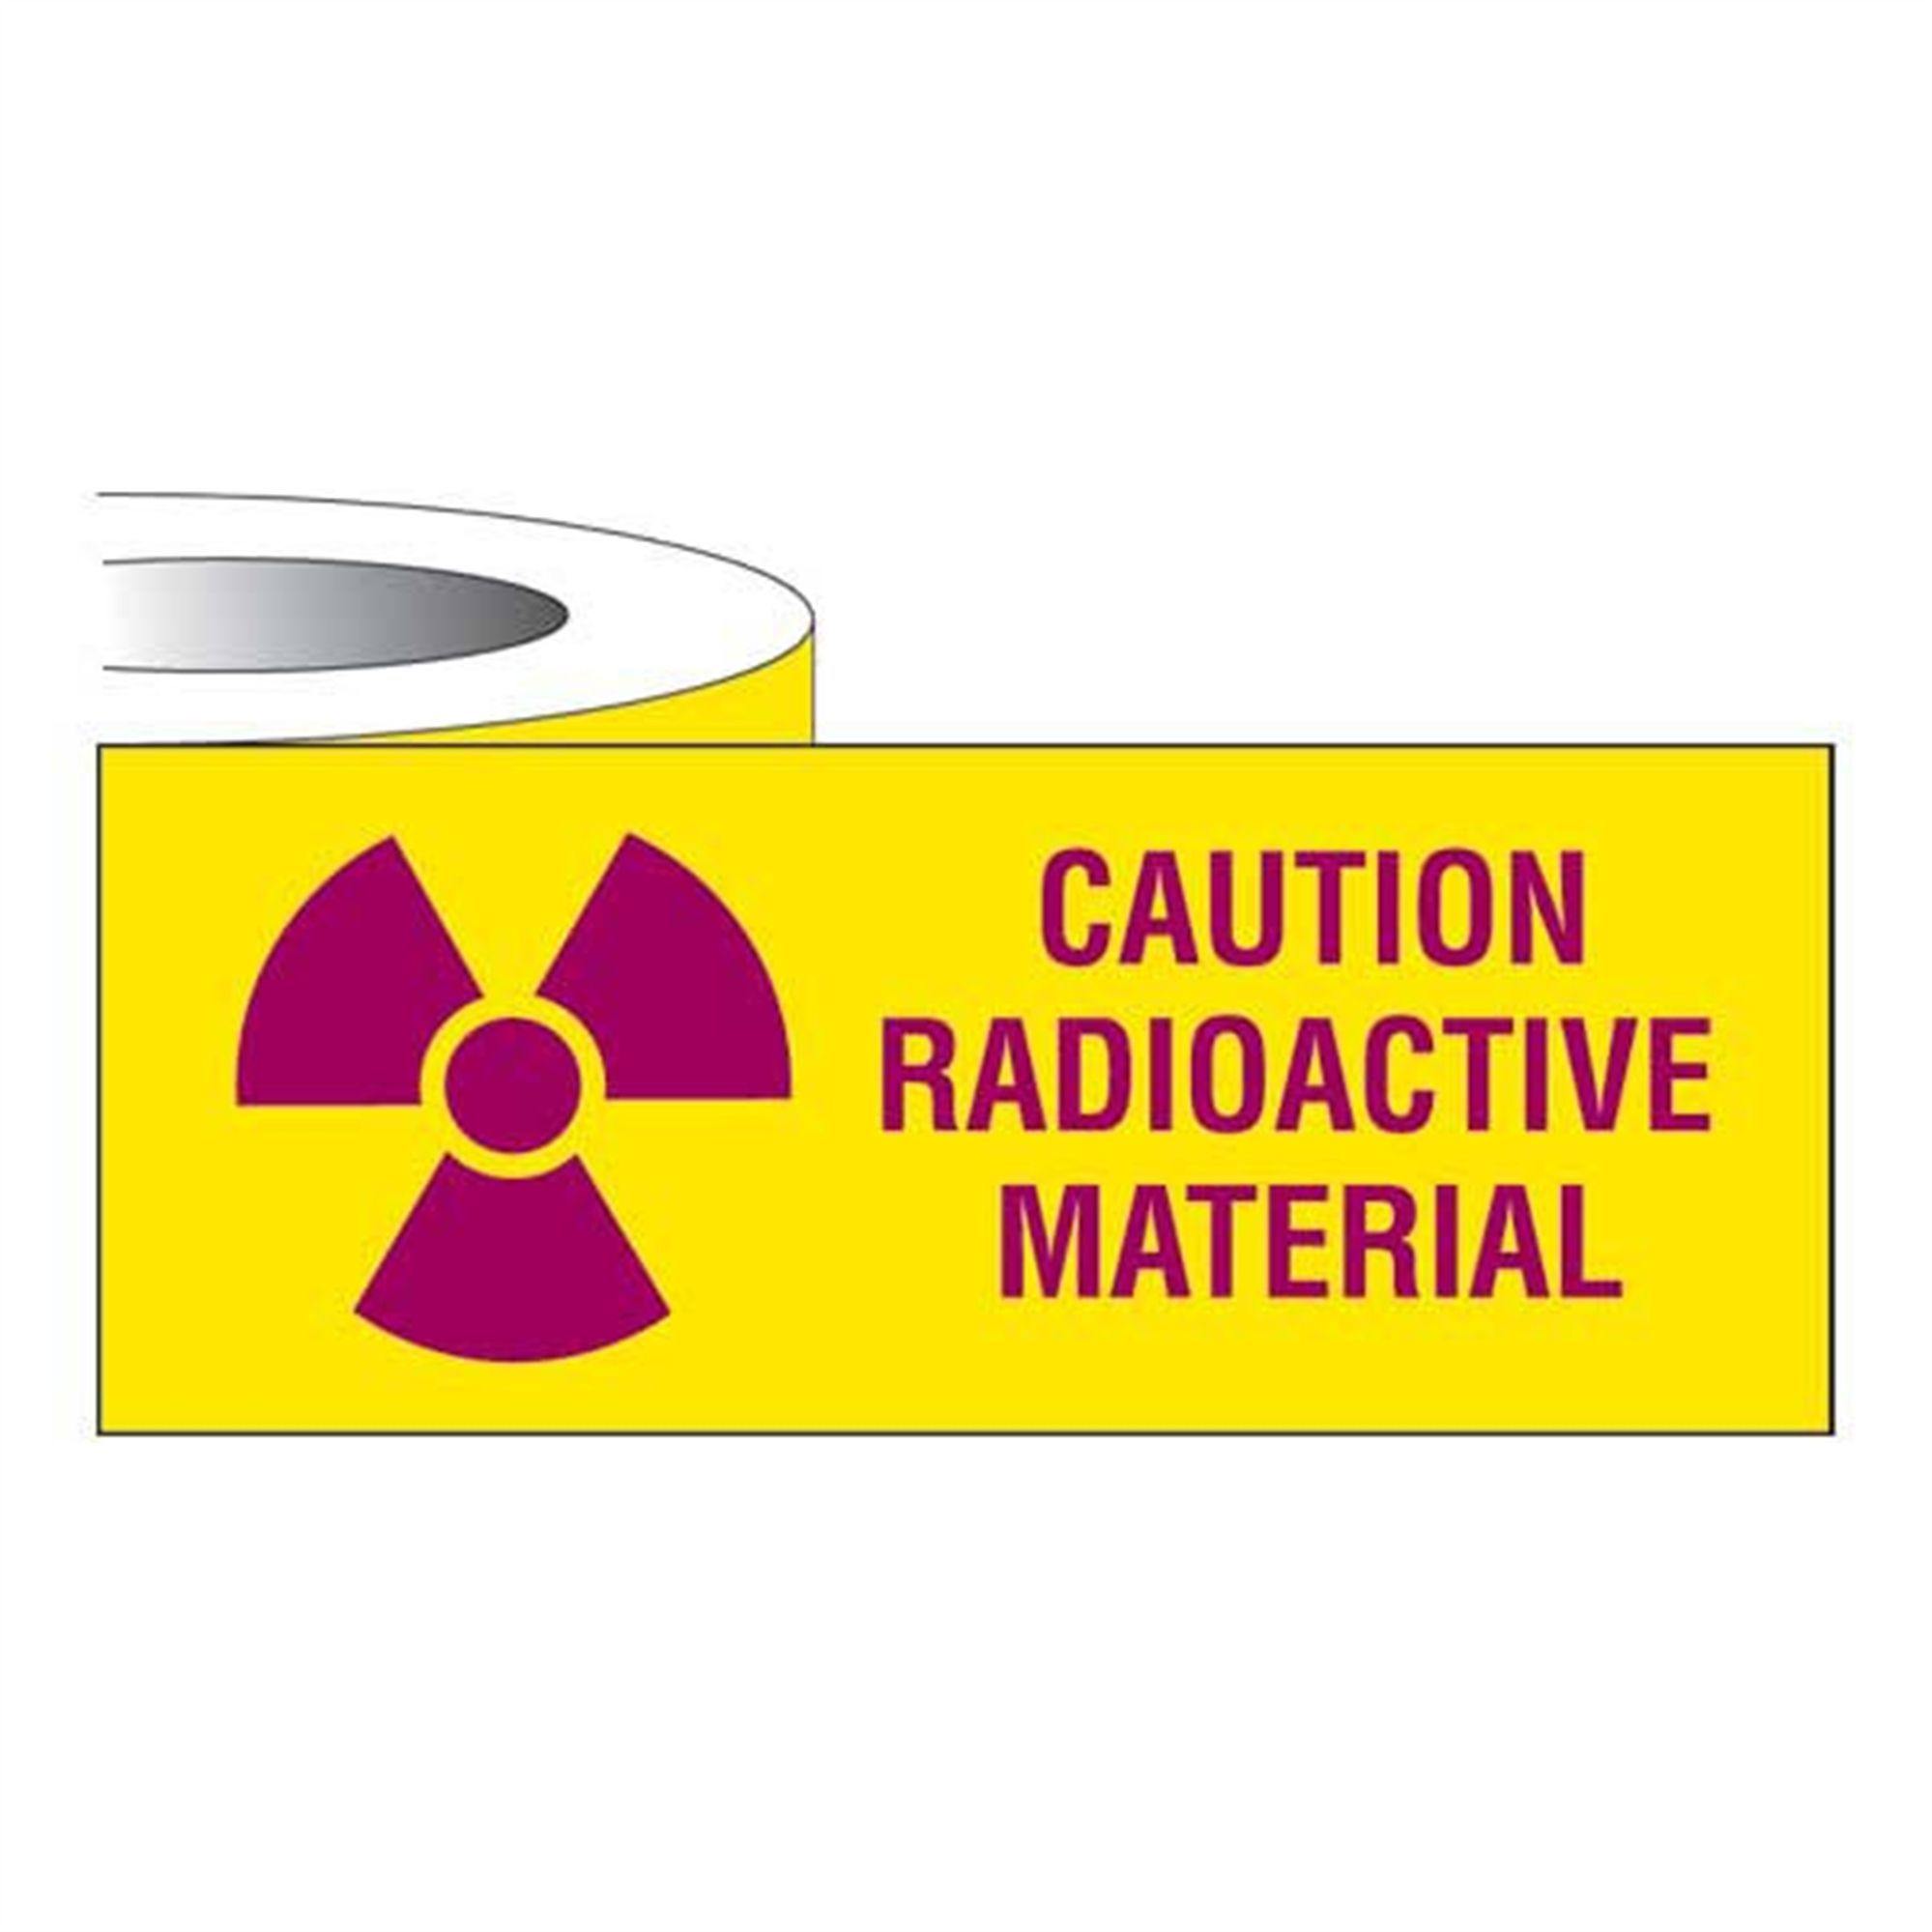 Radioactive Warning Labels Radioactive Material • 1.25"W x 0.3125"H each ,500 / roll - Axiom Medical Supplies